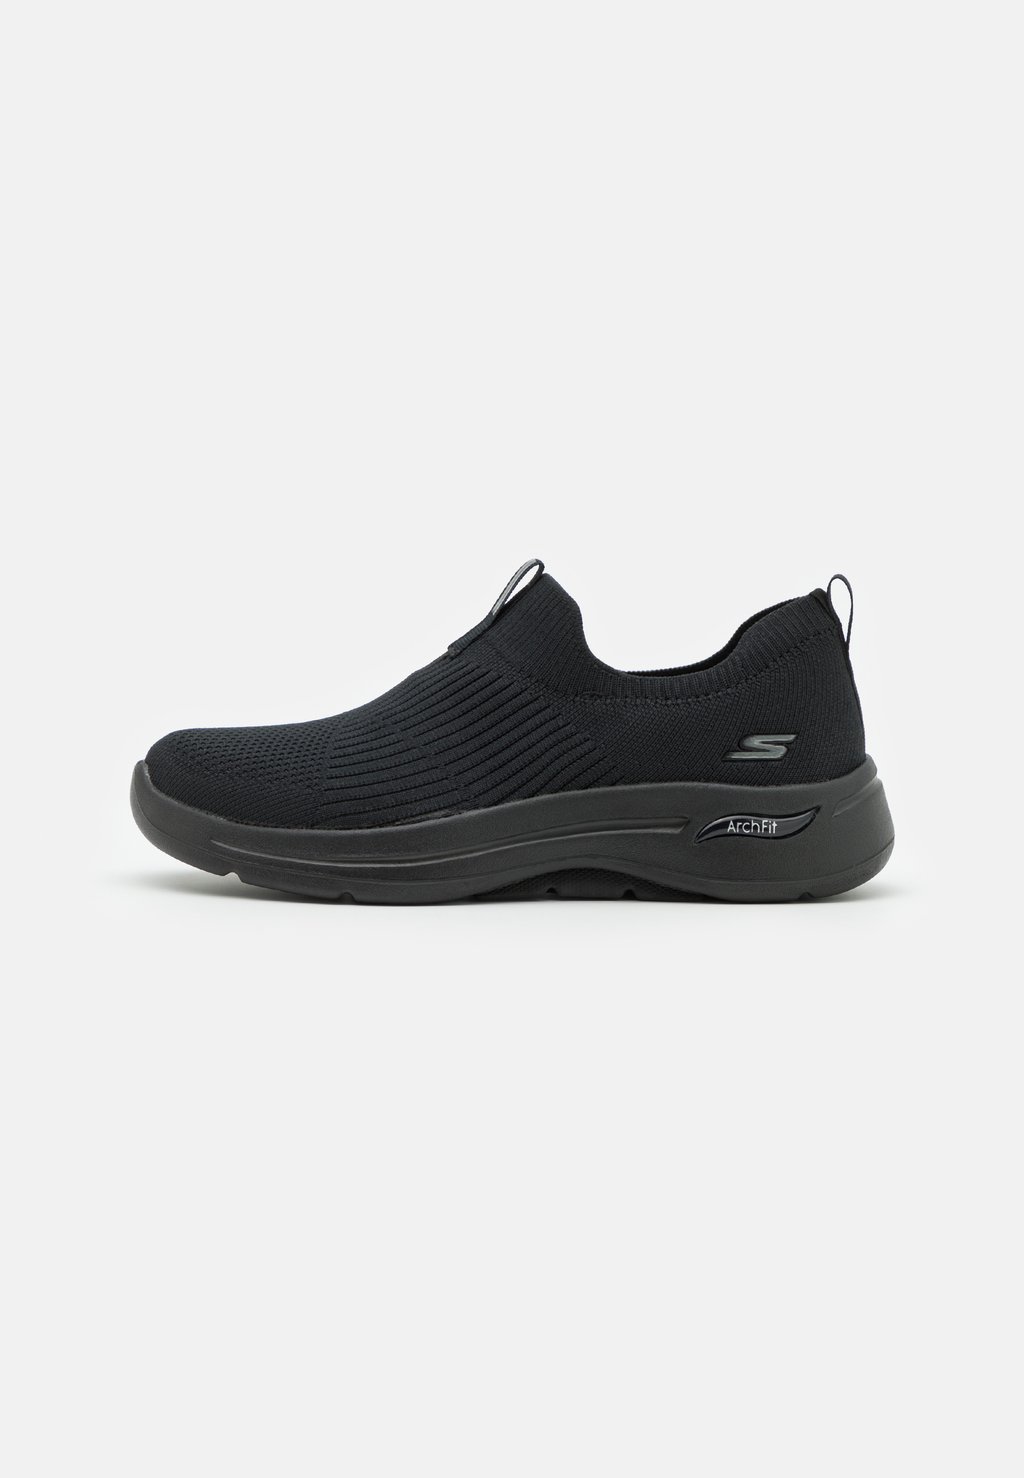 Обувь для ходьбы GO WALK ARCH FIT STRETCH SLIP ON Skechers Performance, цвет black обувь для ходьбы go walk slip on skechers performance цвет black